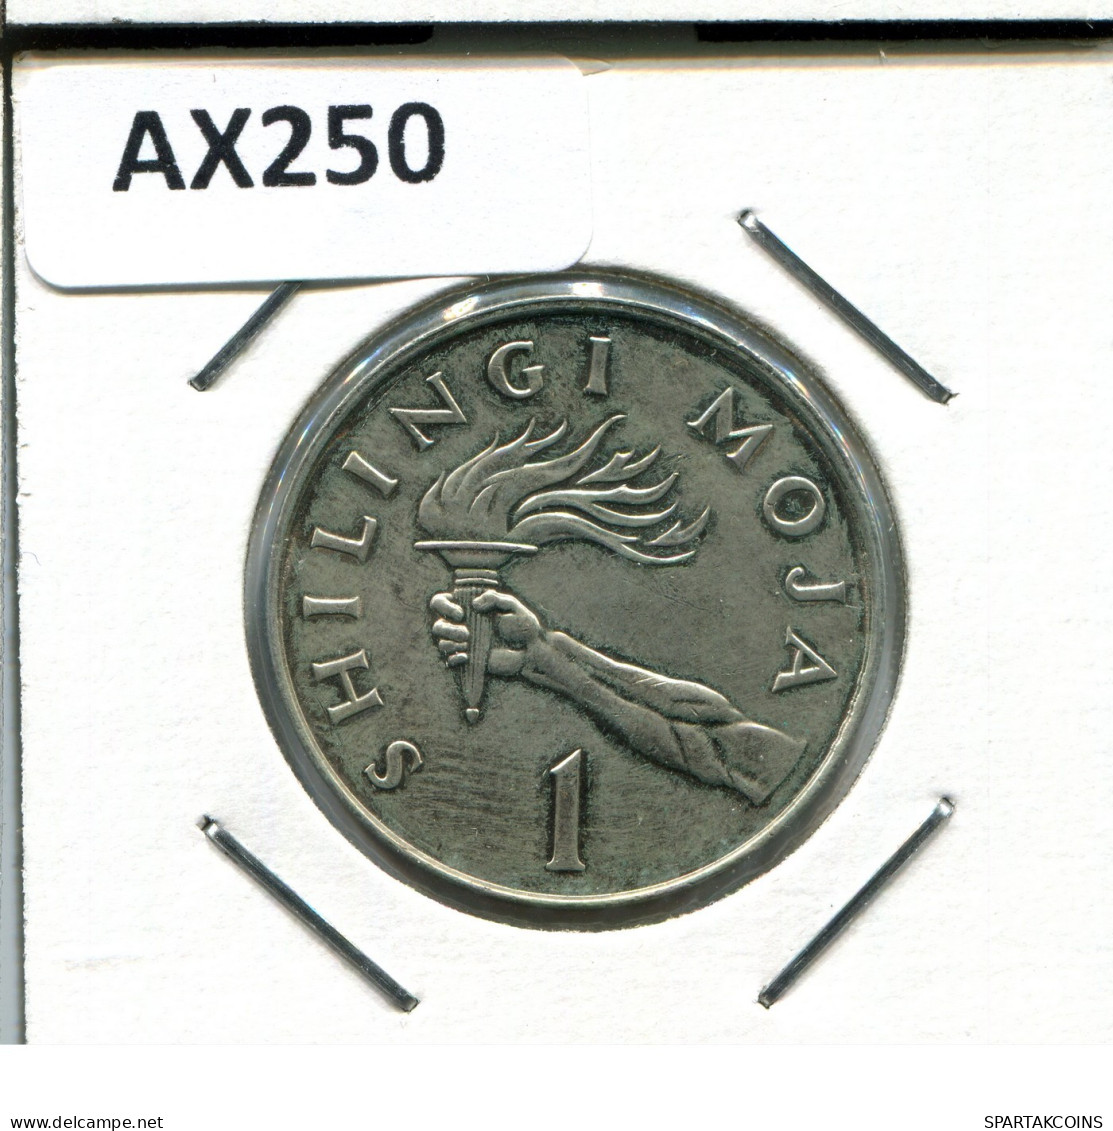 1 SHILLINGI 1984 TANZANIA Moneda #AX250.E.A - Tansania